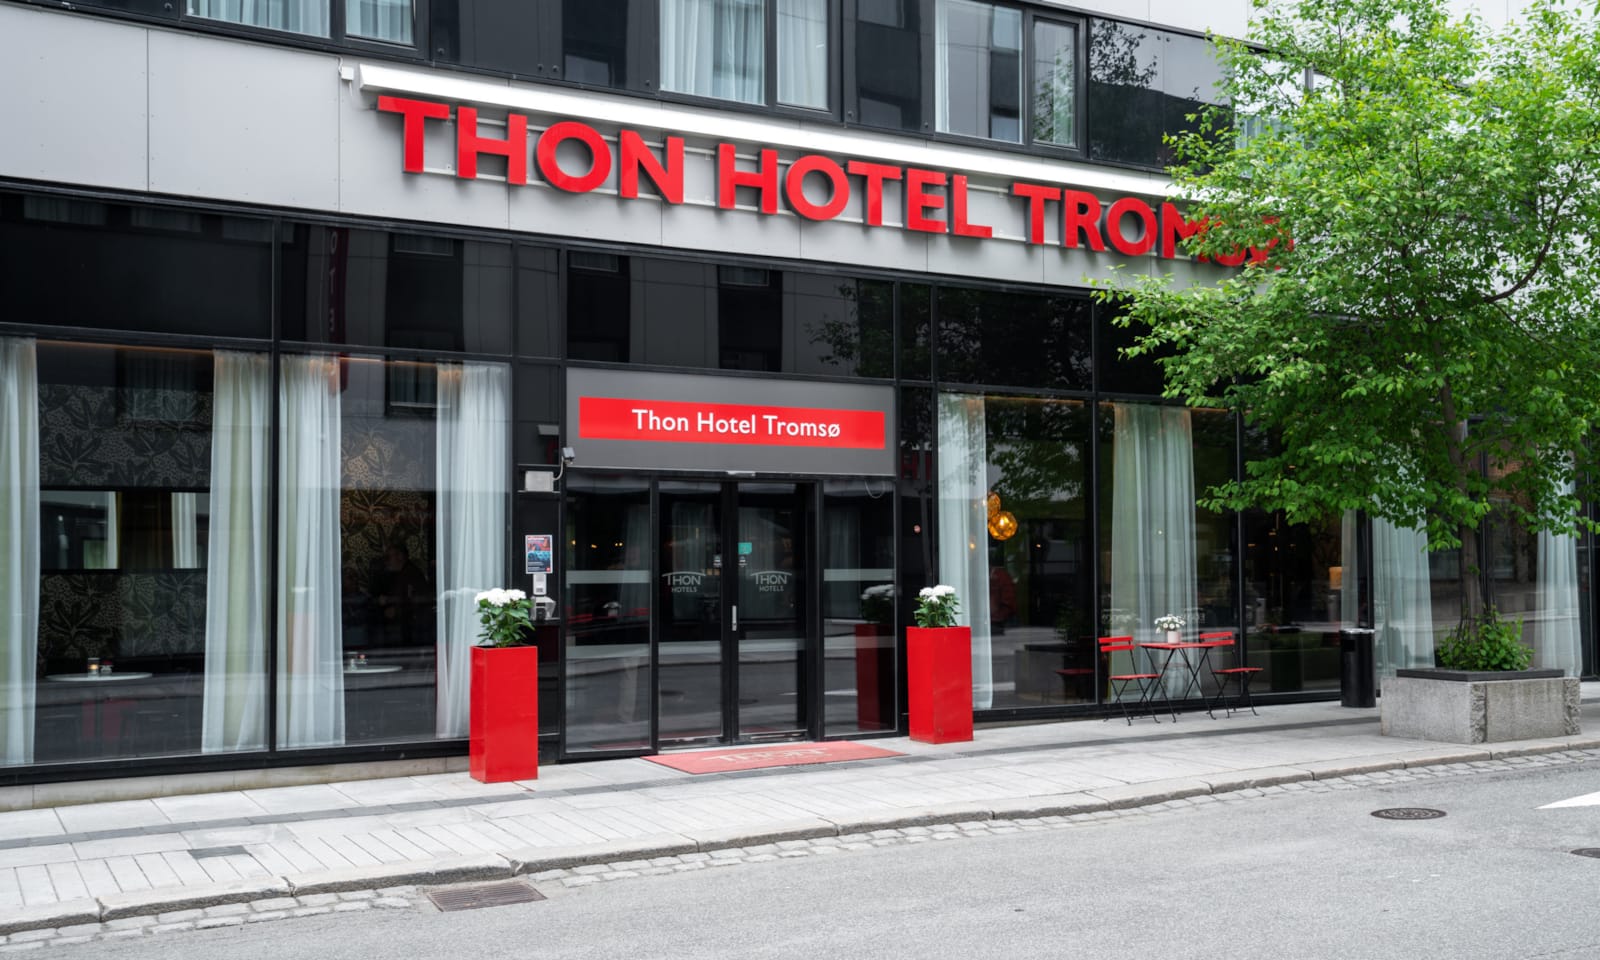 Thon Hotel Tromsø fasade